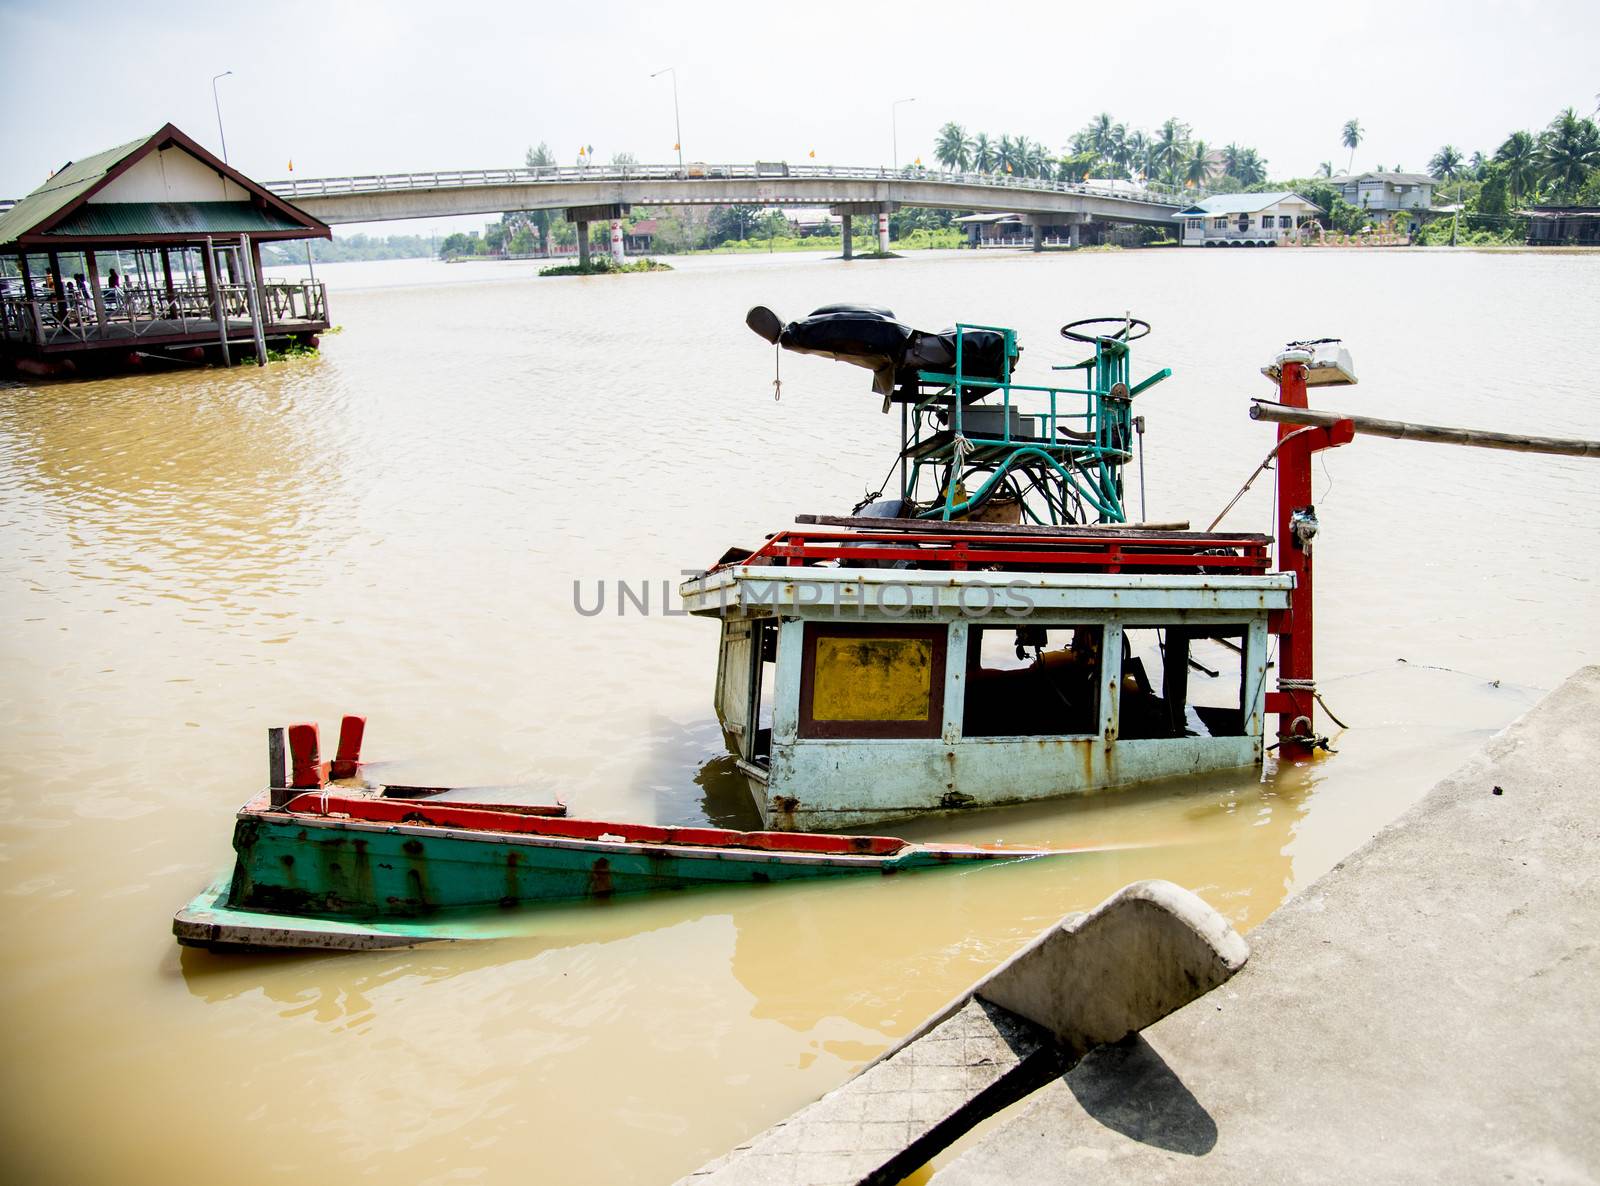 Boat sinked at the port1 by gjeerawut